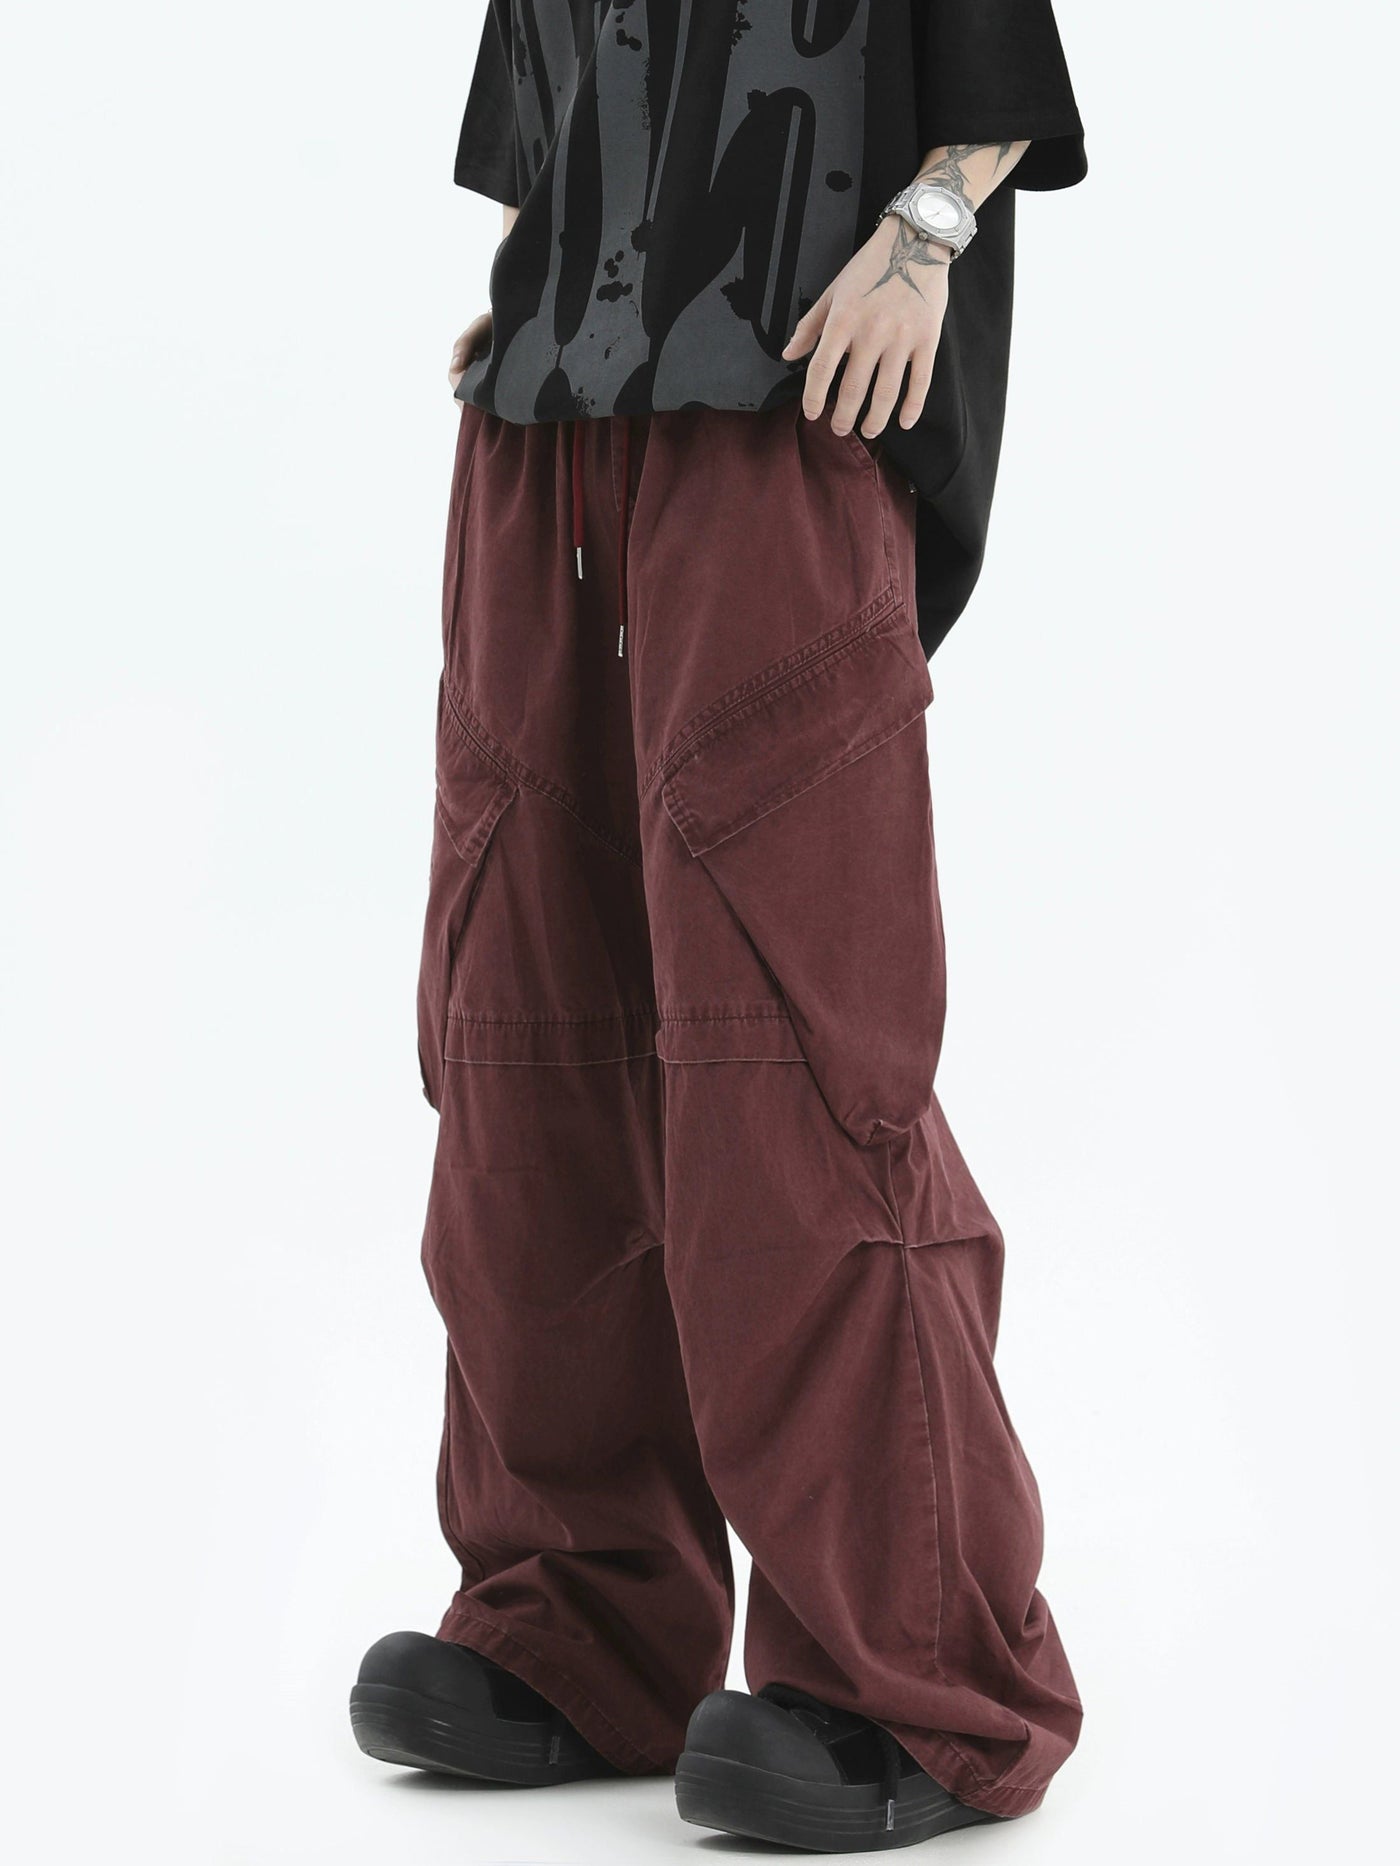 Tilted Pockets Cargo Pants Korean Street Fashion Pants By INS Korea Shop Online at OH Vault